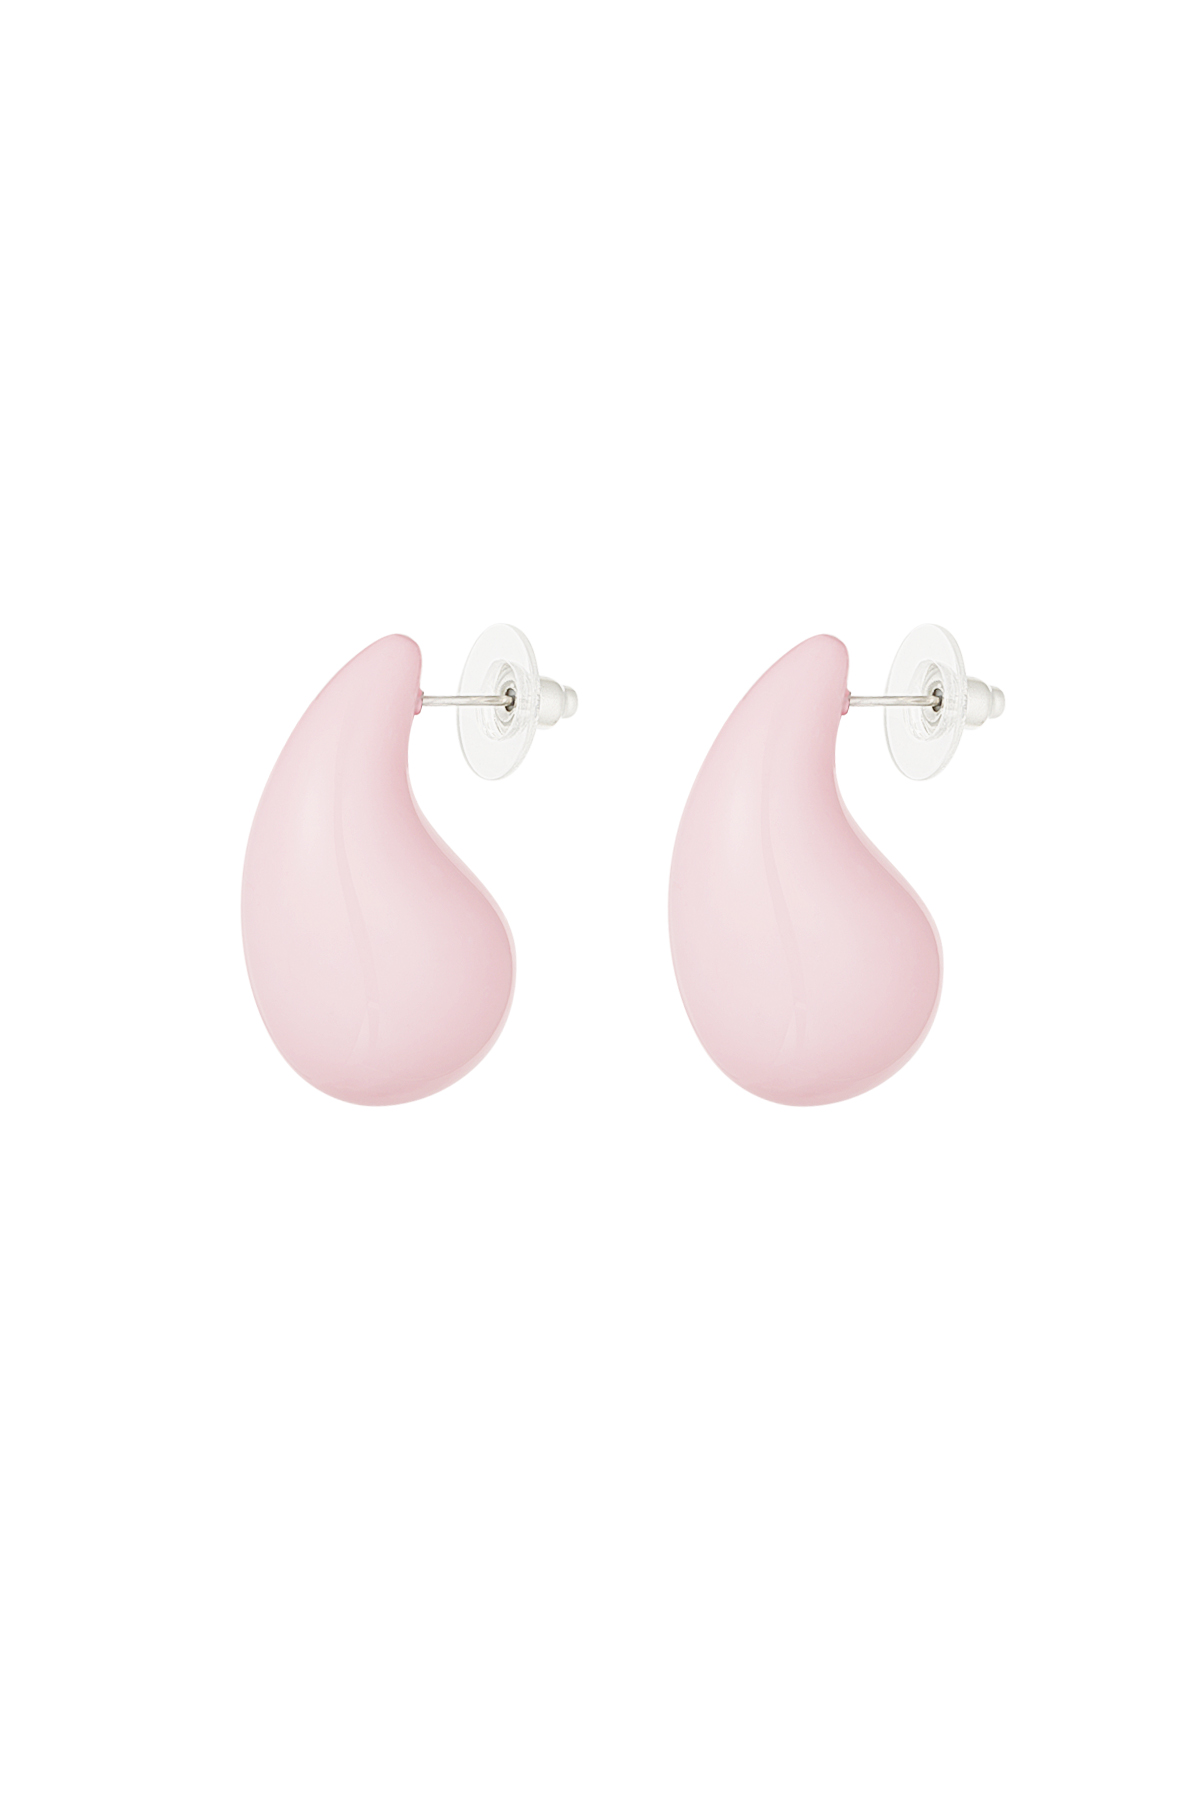 Stylish earrings-pink h5 